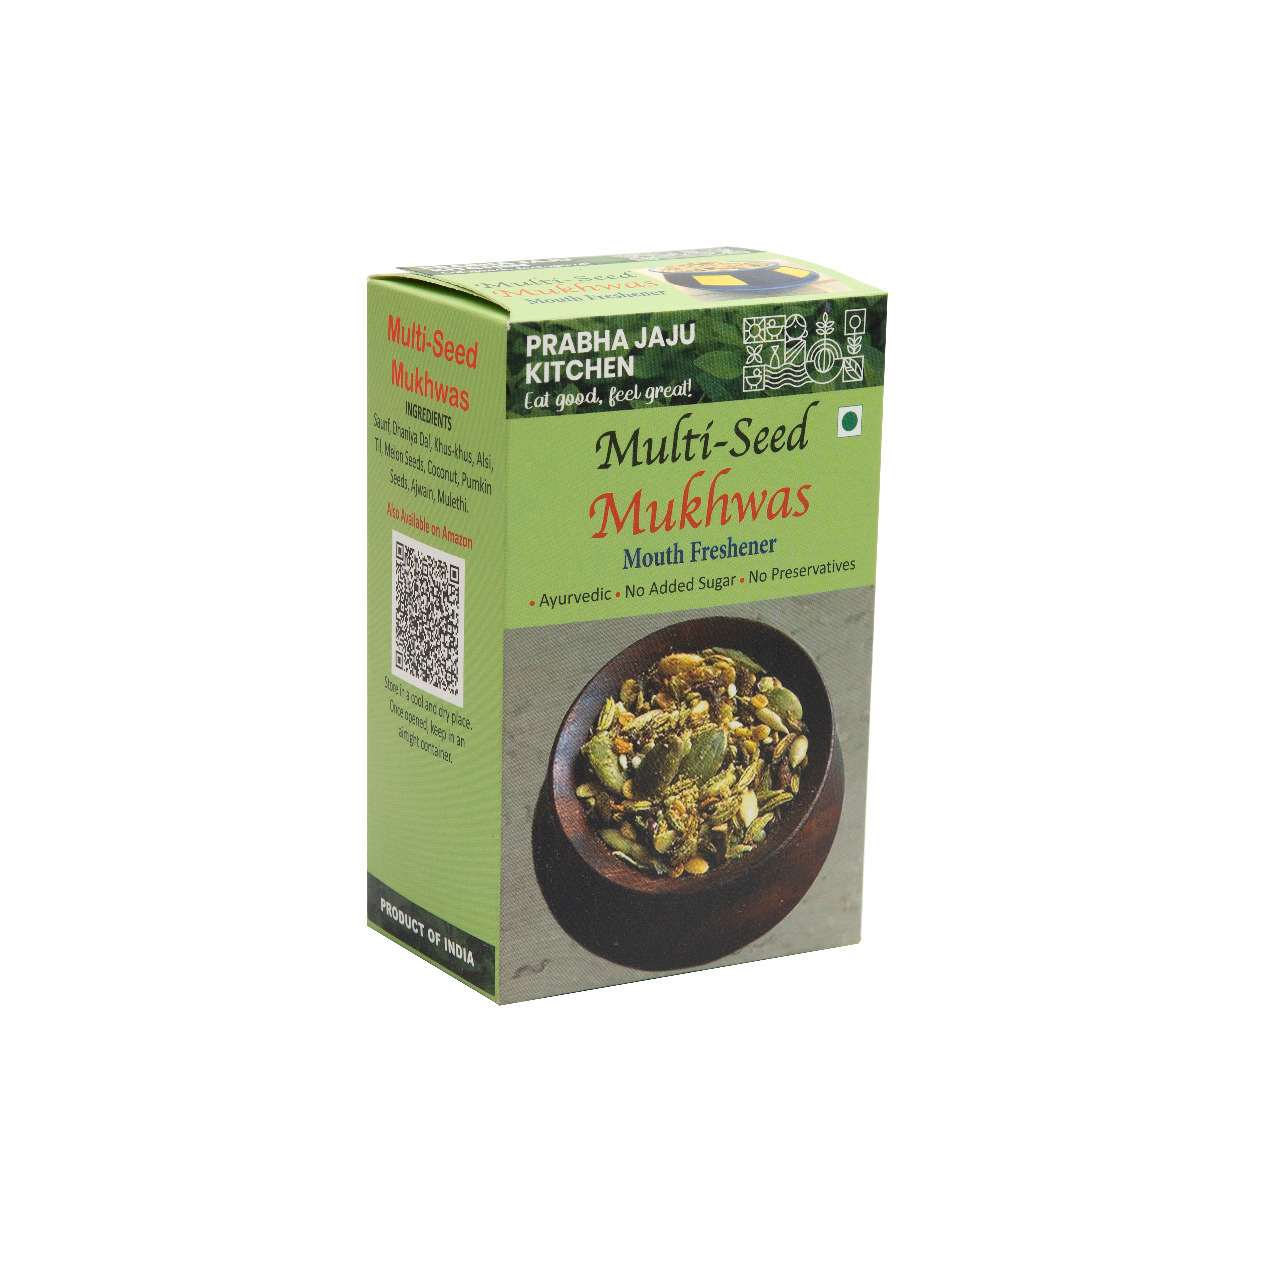 Buy Prabha Jaju Multi-seeds Mukhwas (Mouth Freshener ) at Best Price Online